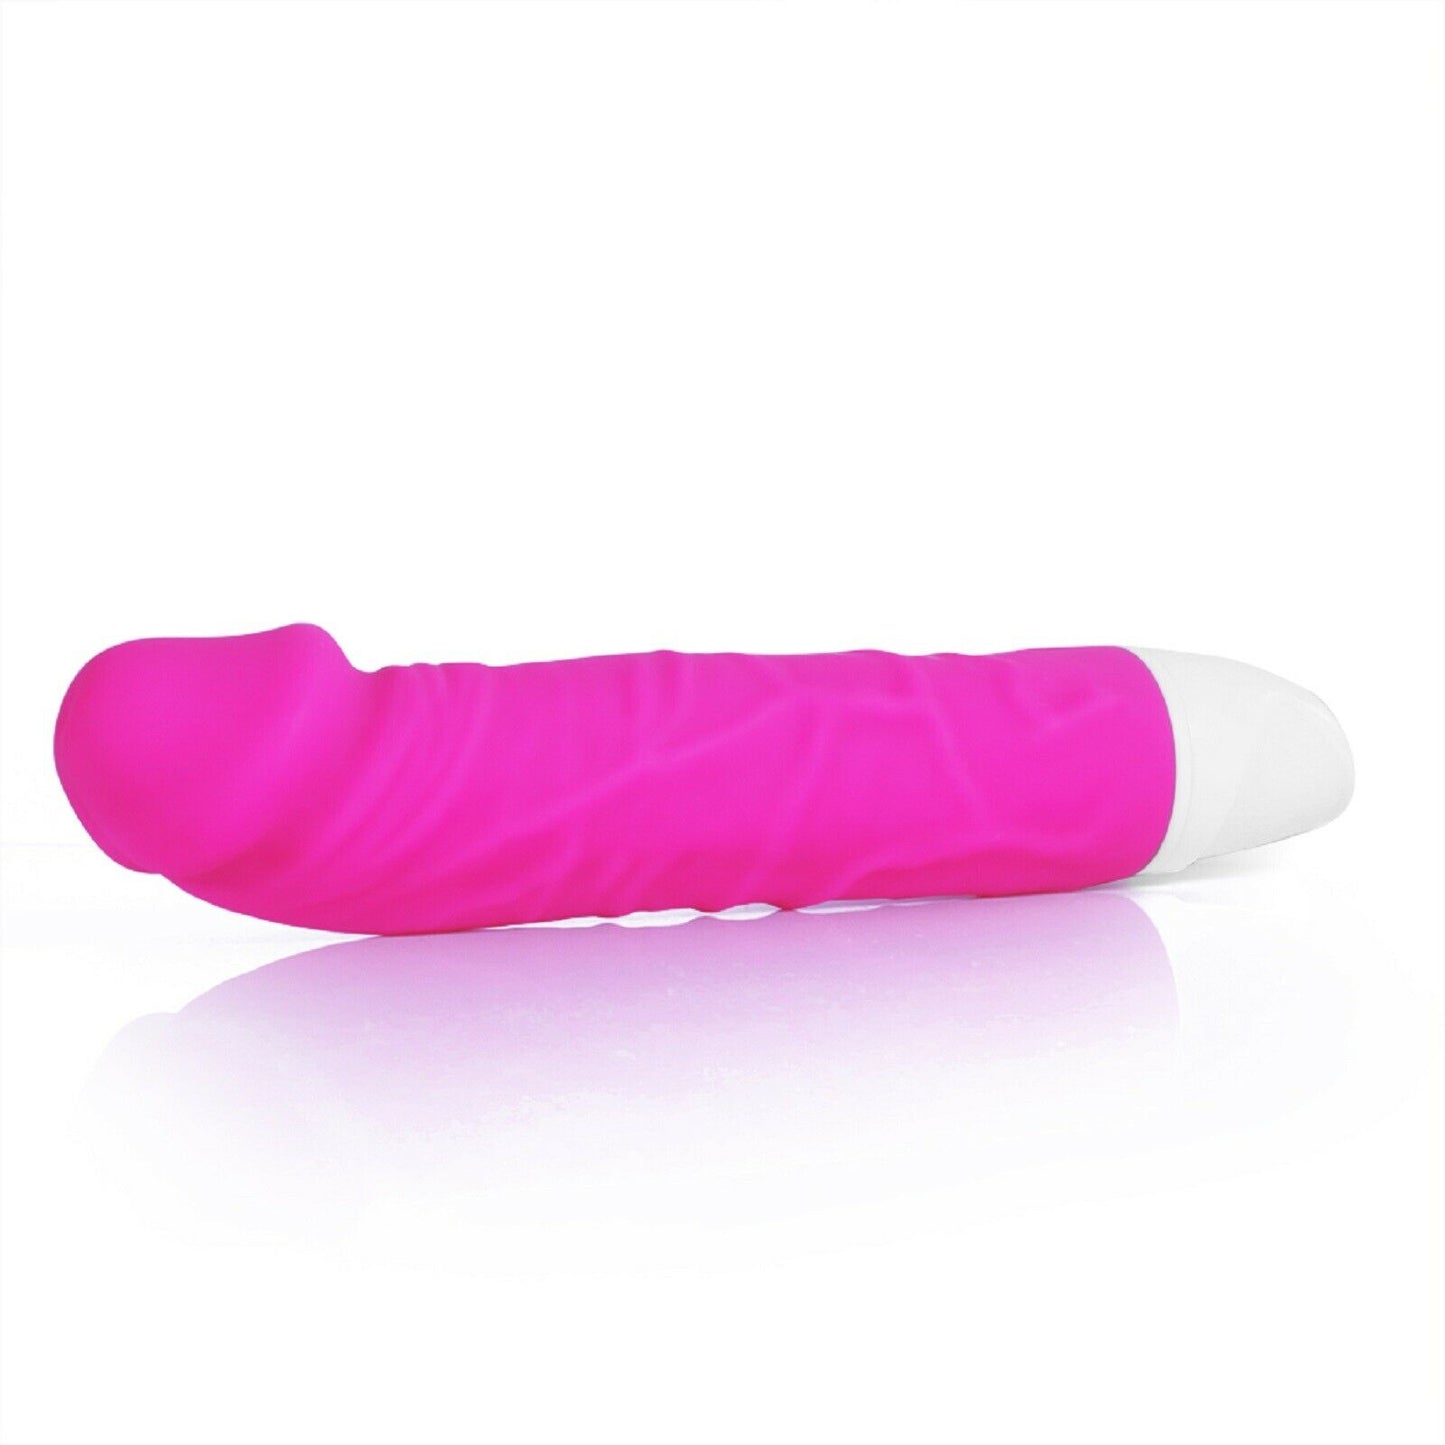 7.5" Large Vibrator Dildo Realistic Vibrating Penis G-spot Wand Adult Sex Toy